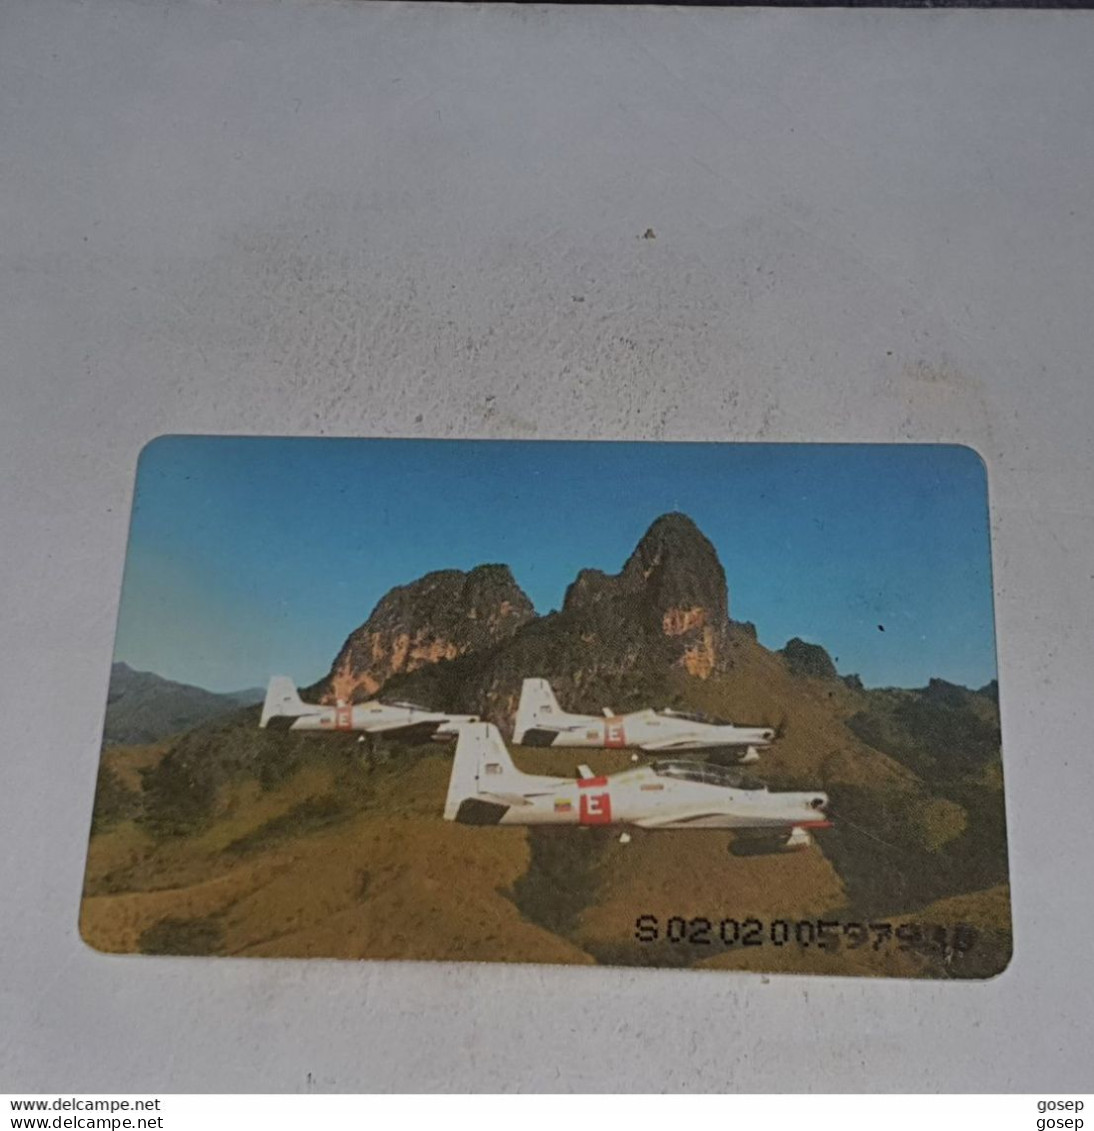 Venezuela-(VE-CAN2-774)-T-27 Tucano-(5/8)-(118)-(Bs.3.000)-(S02000597938)-used Card+1card Prepiad Free - Venezuela